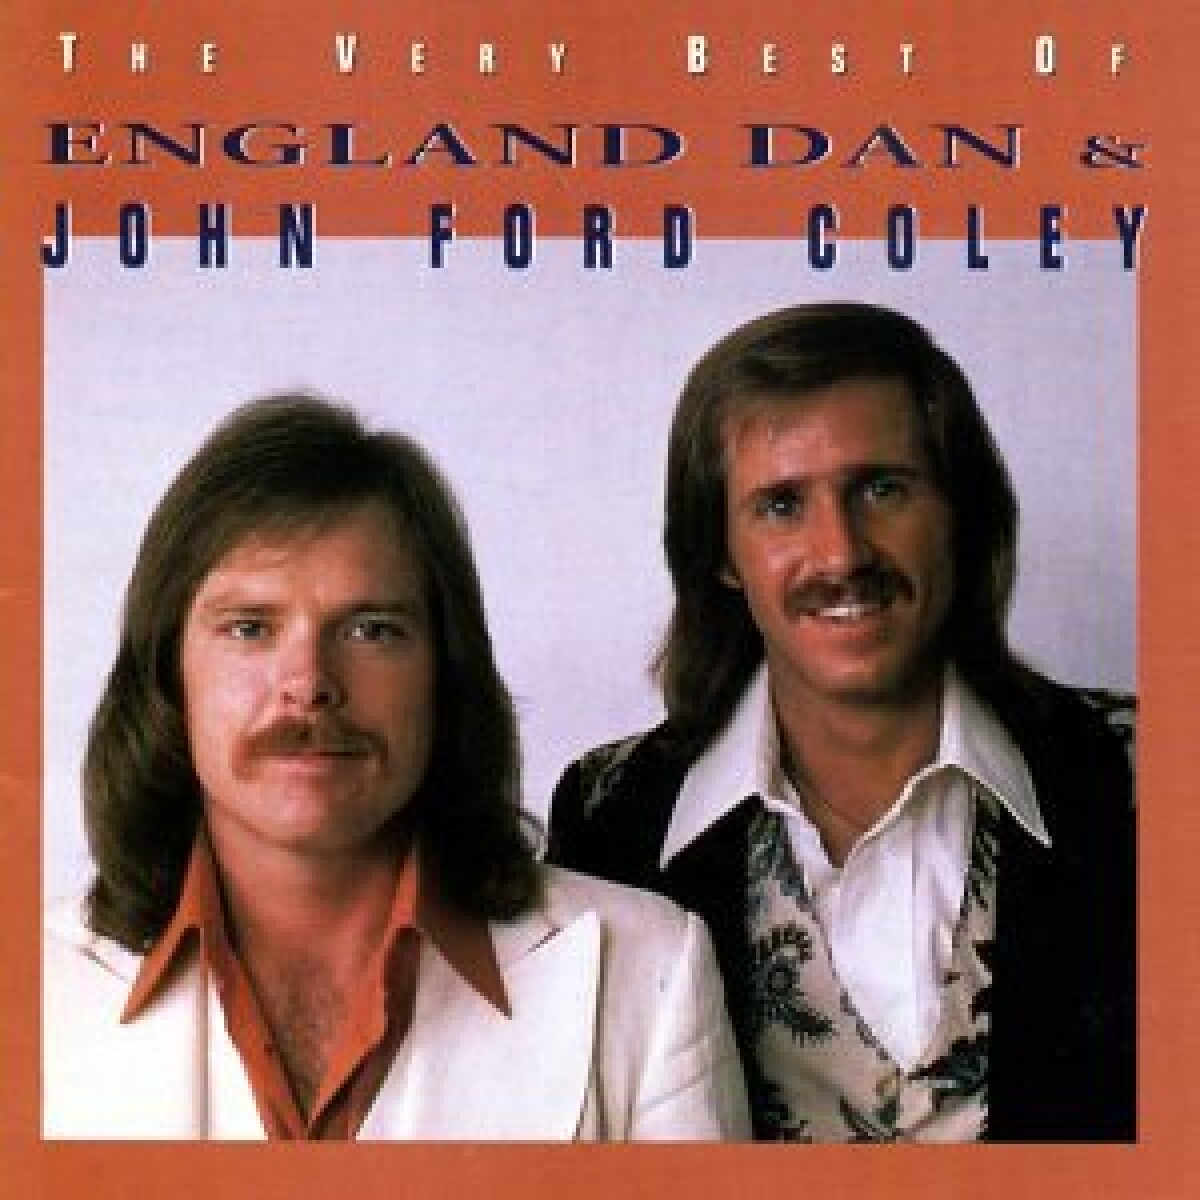 England Dan/cole John Ford-very Best Of (cd) 